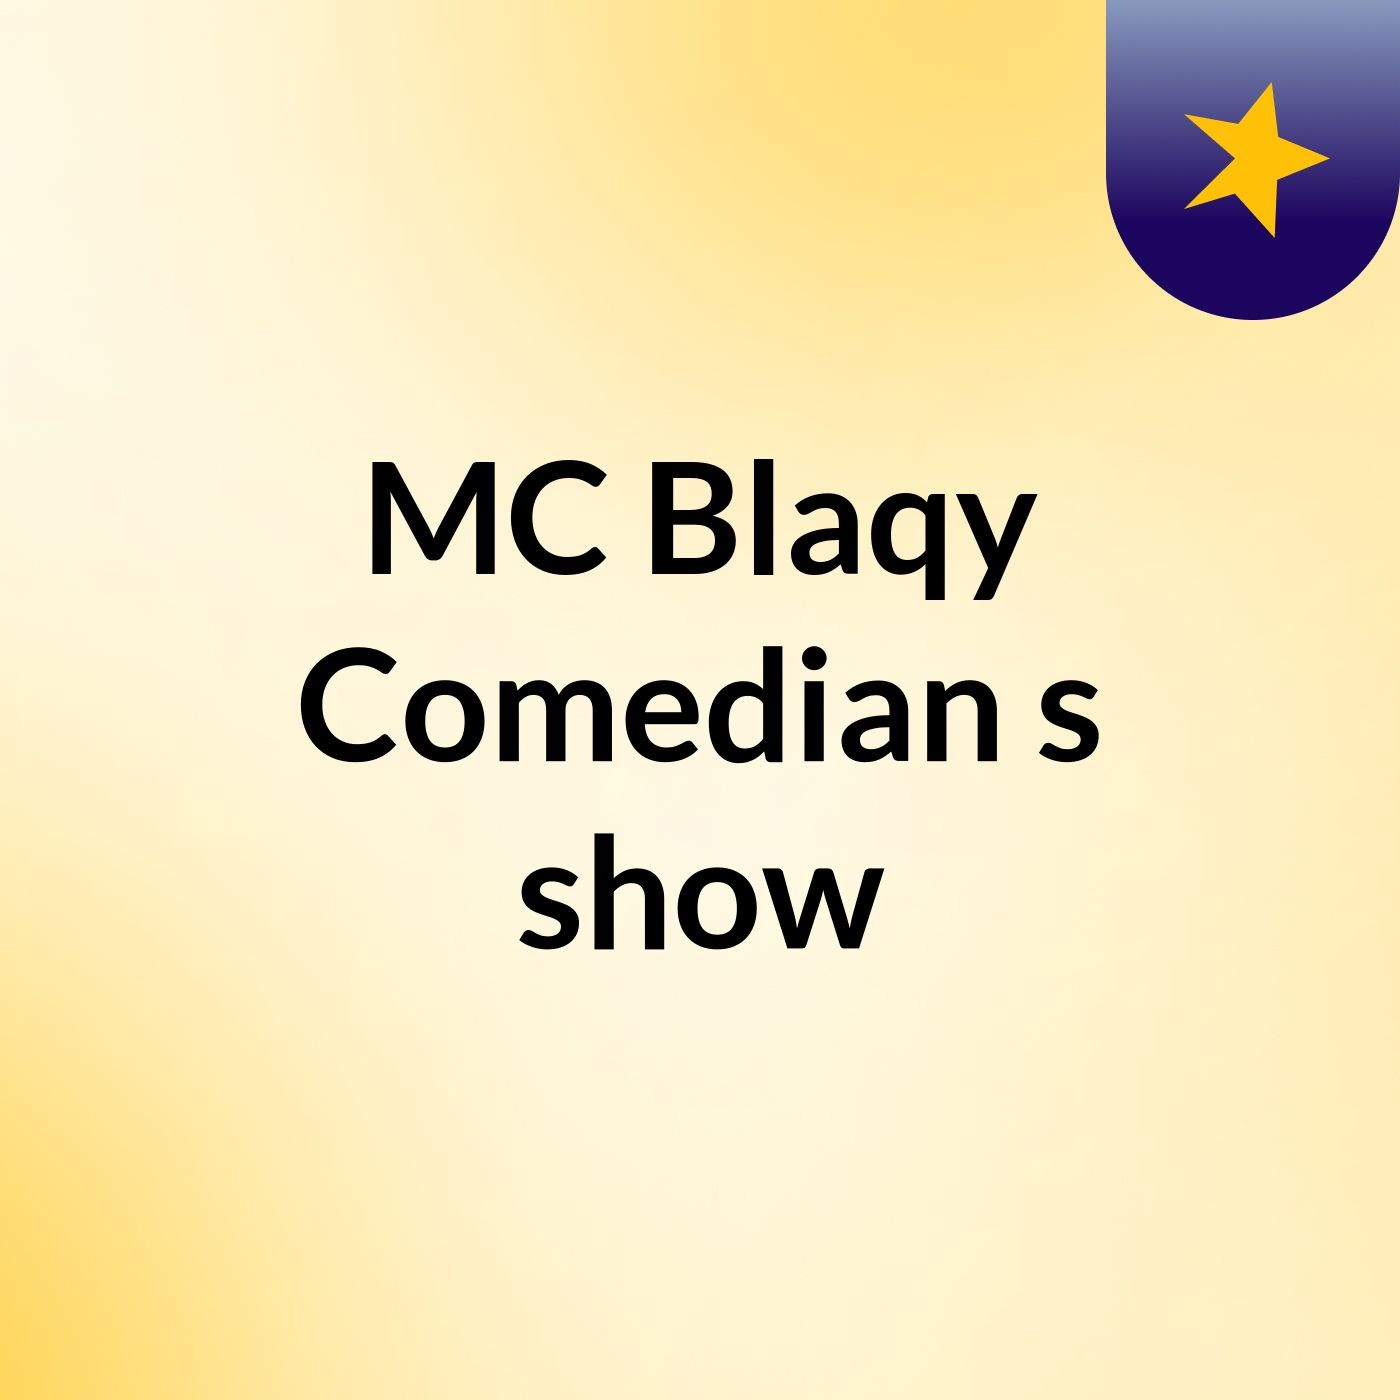 MC Blaqy Comedian's show